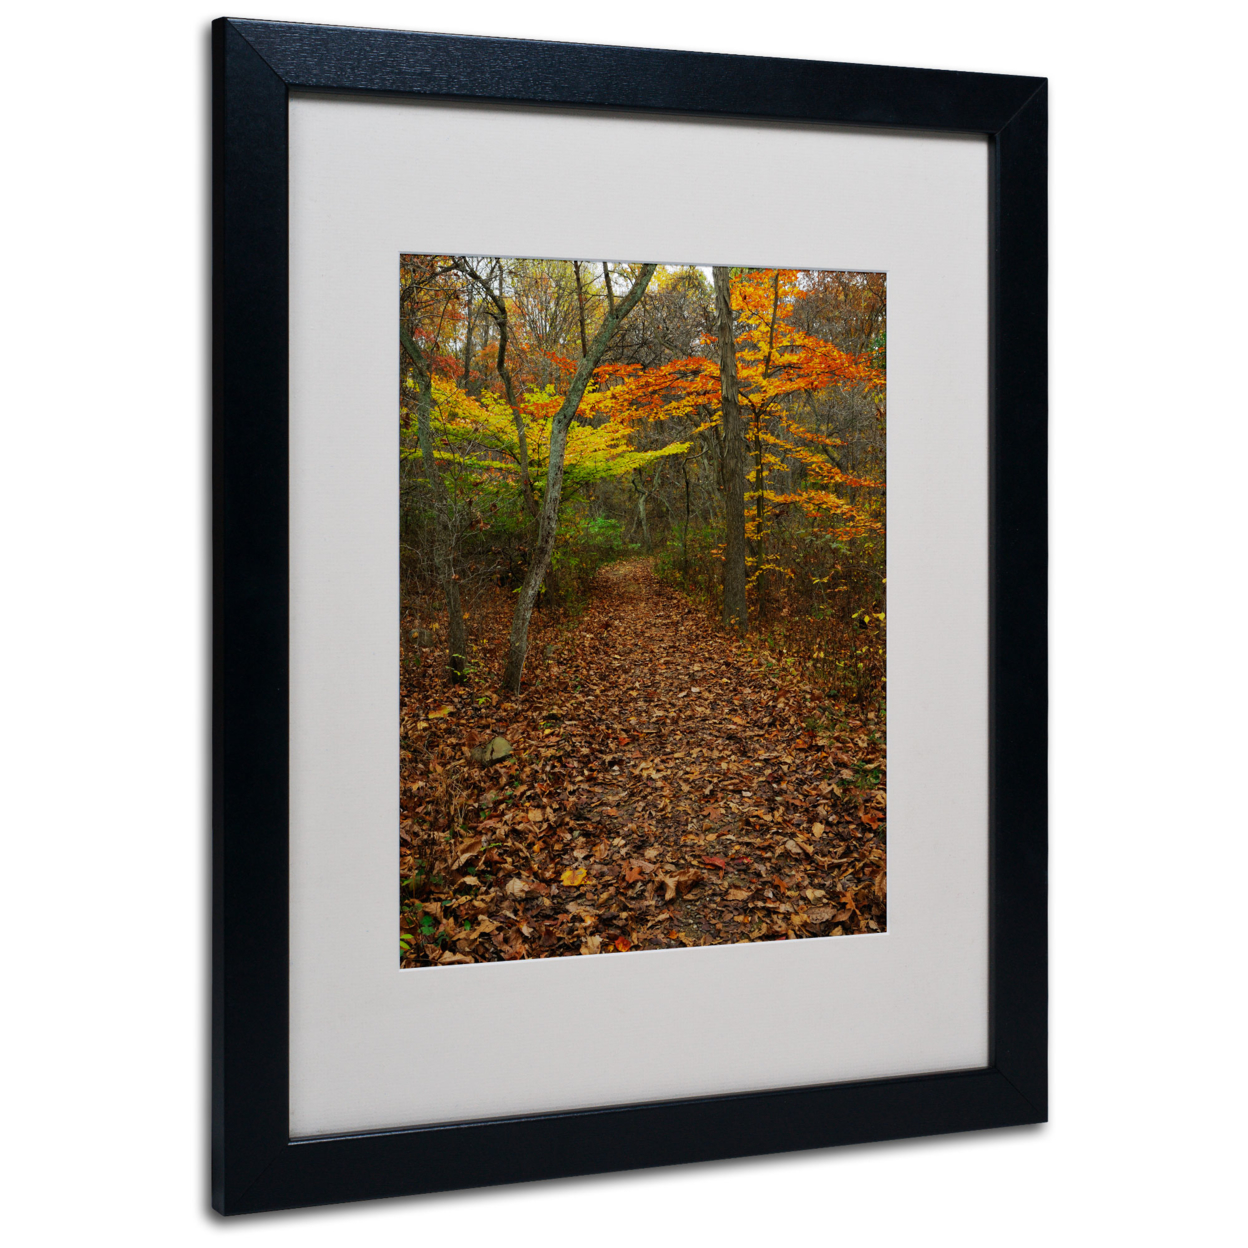 Kurt Shaffer 'Late Autumn Hike' Black Wooden Framed Art 18 X 22 Inches